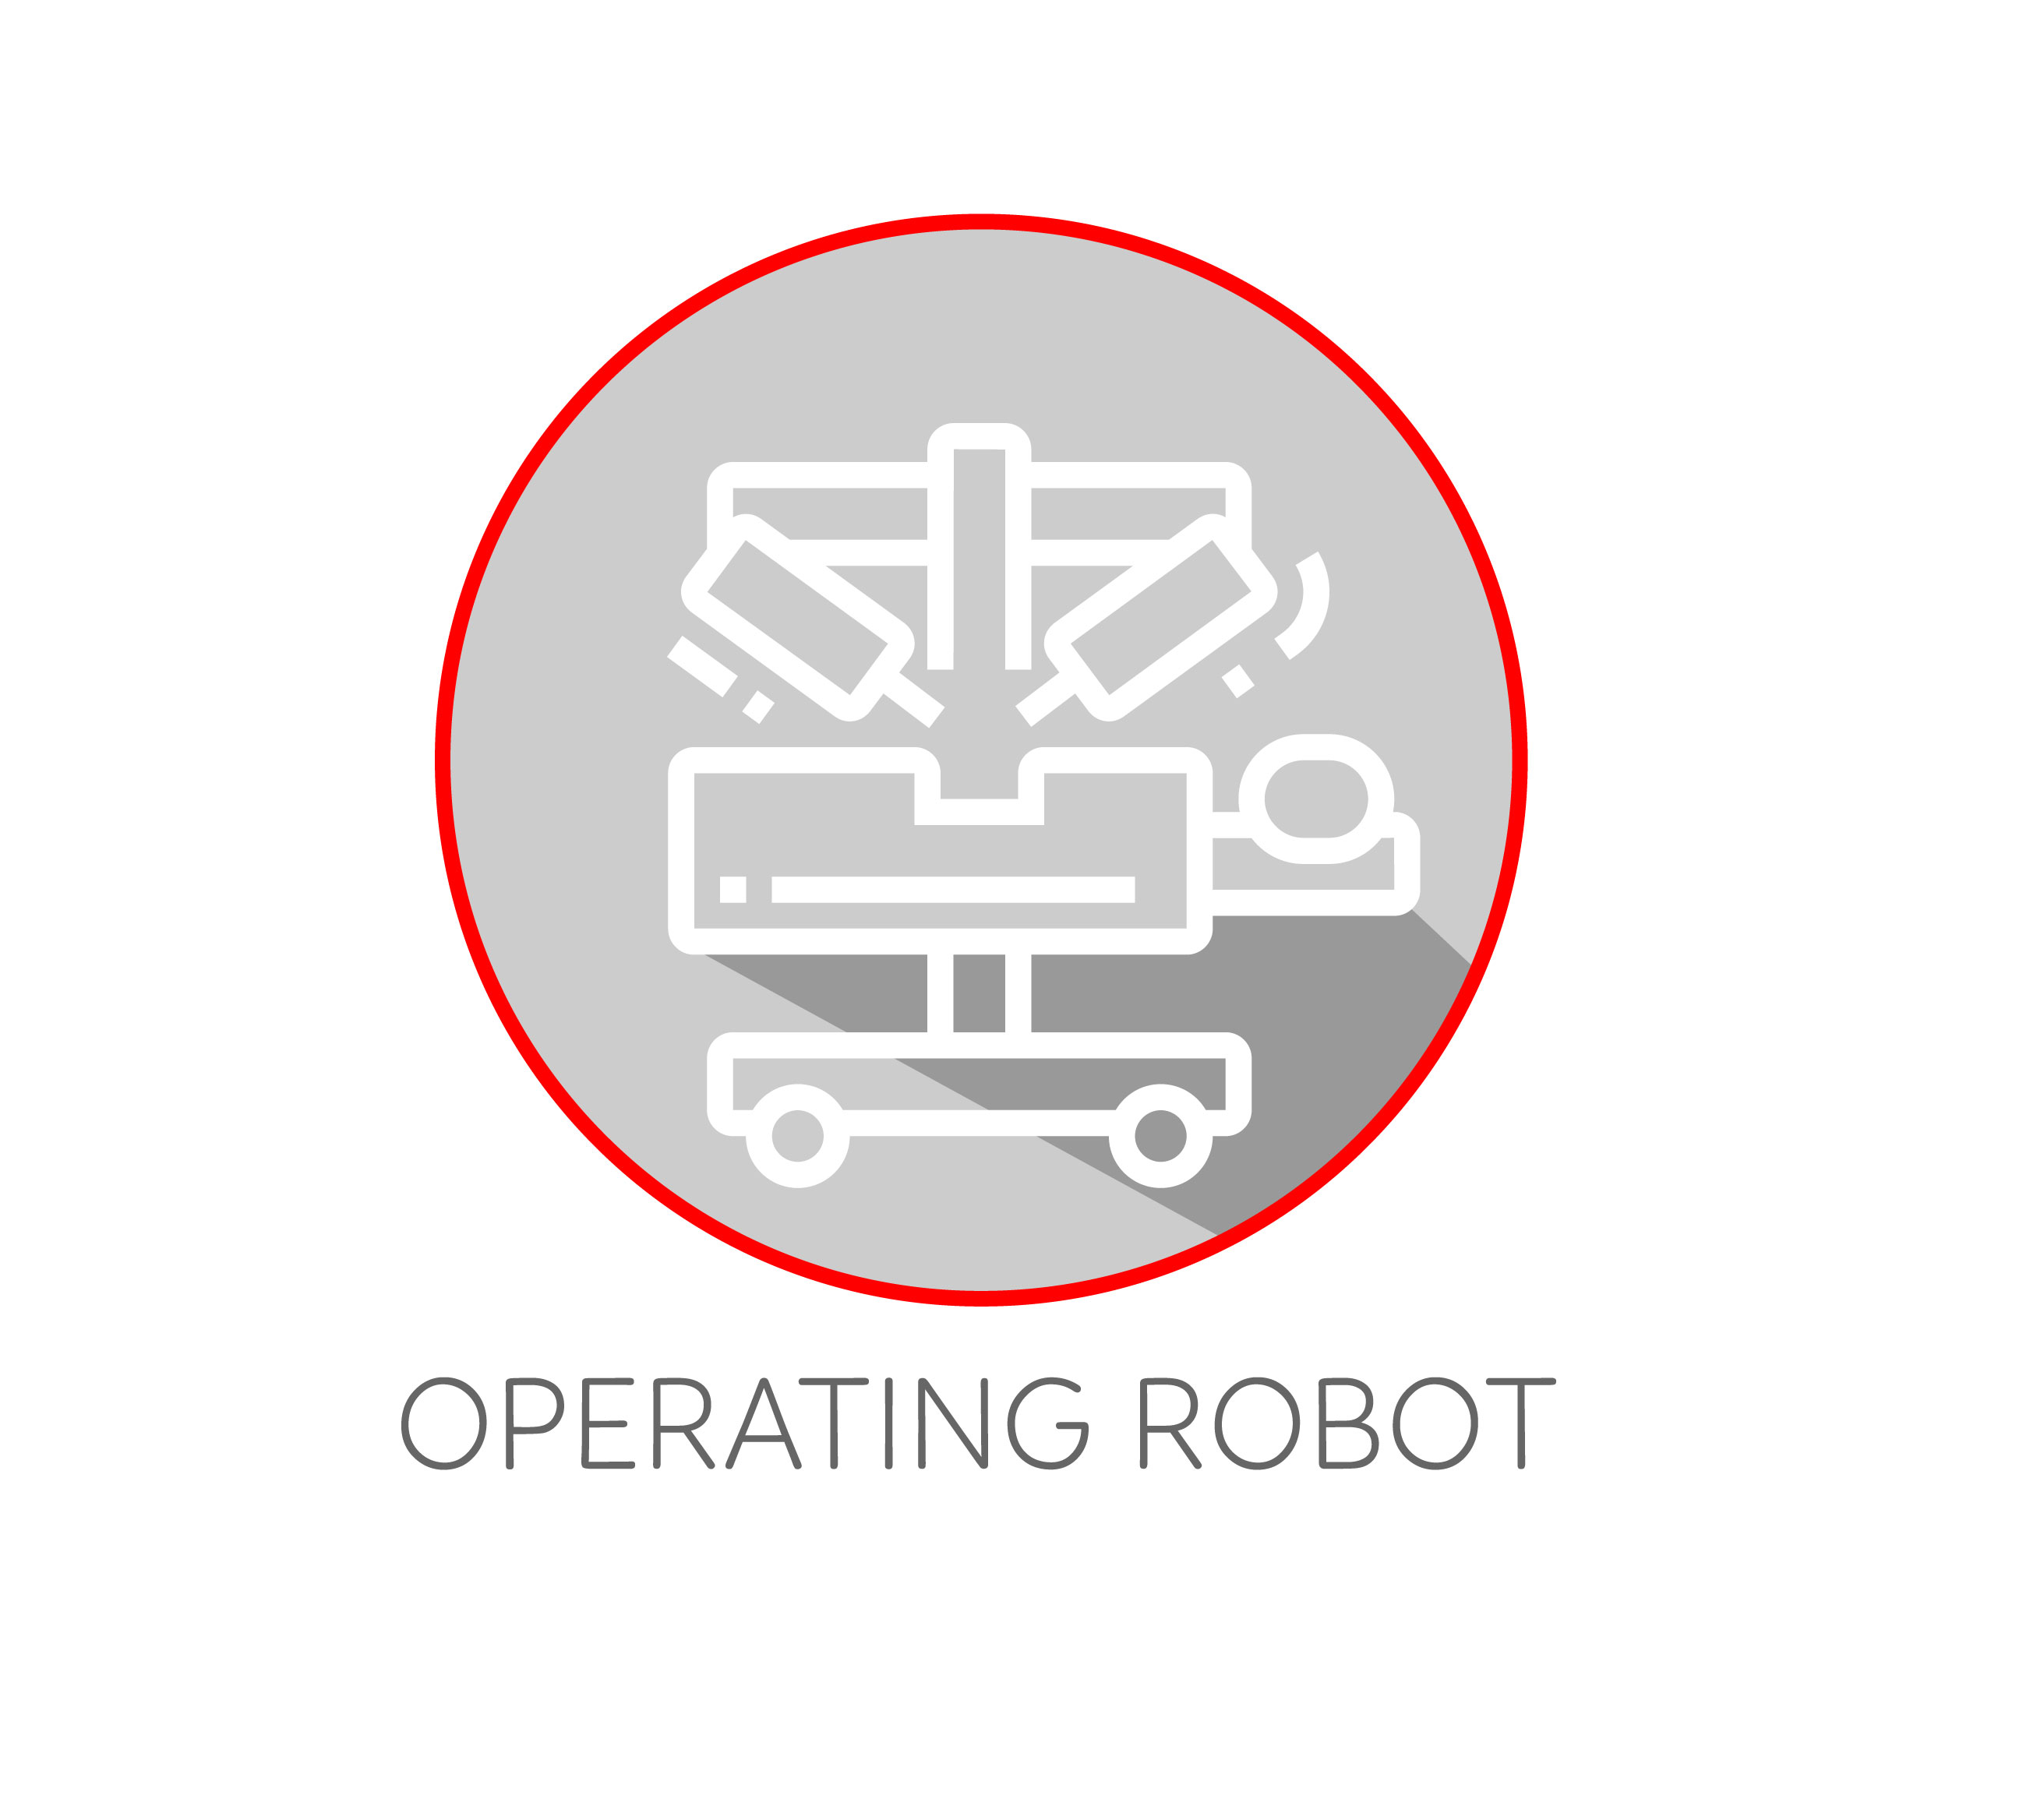 Operating robot